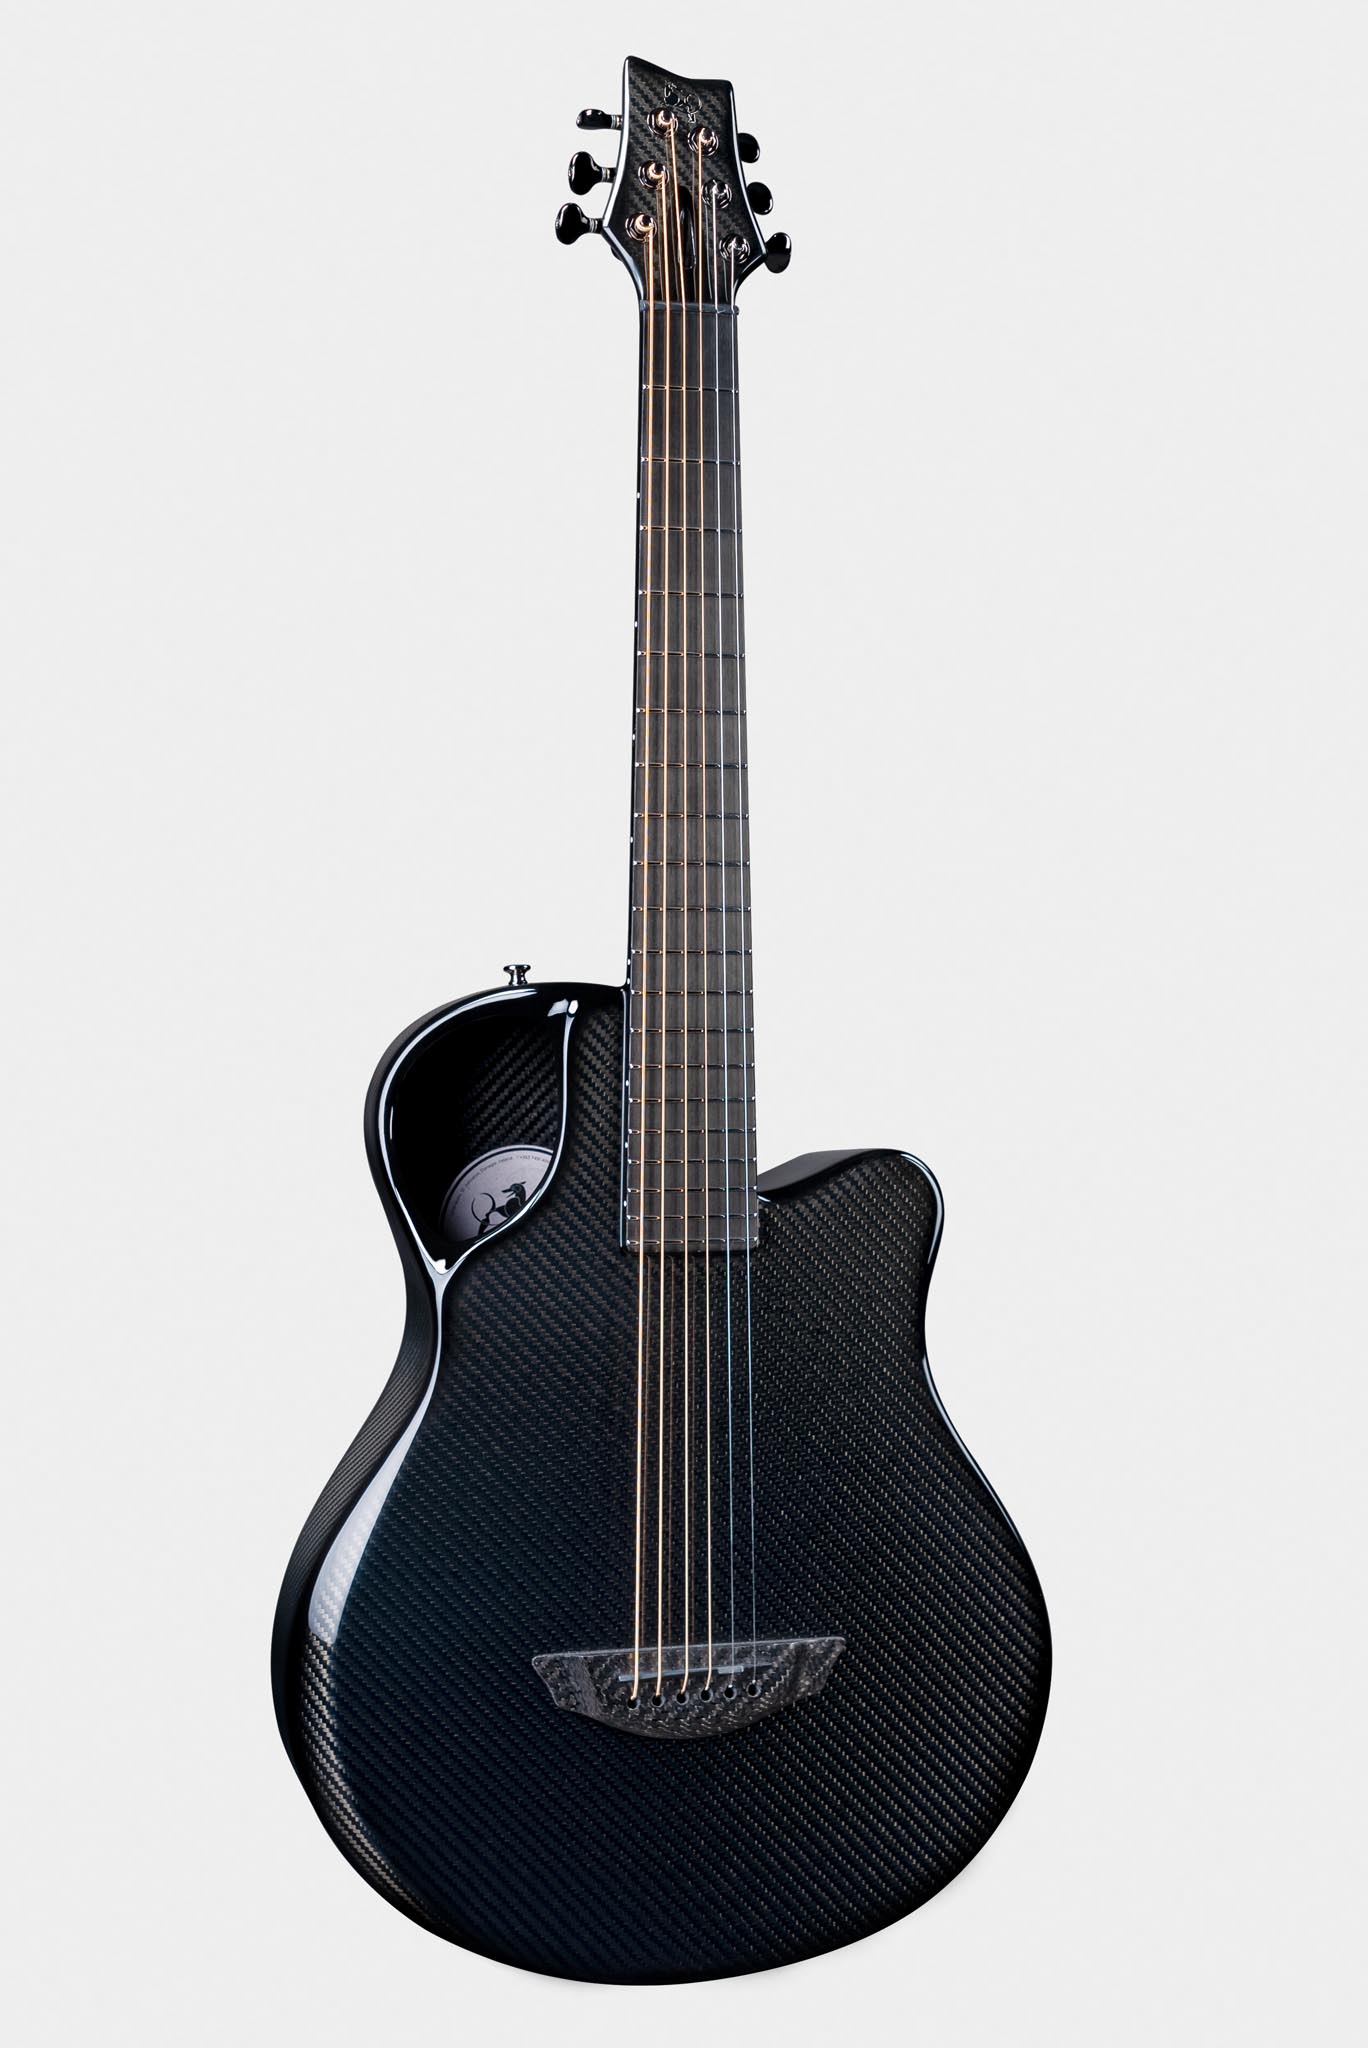 Emerald X7 Carbon Fiber Guitar in Black